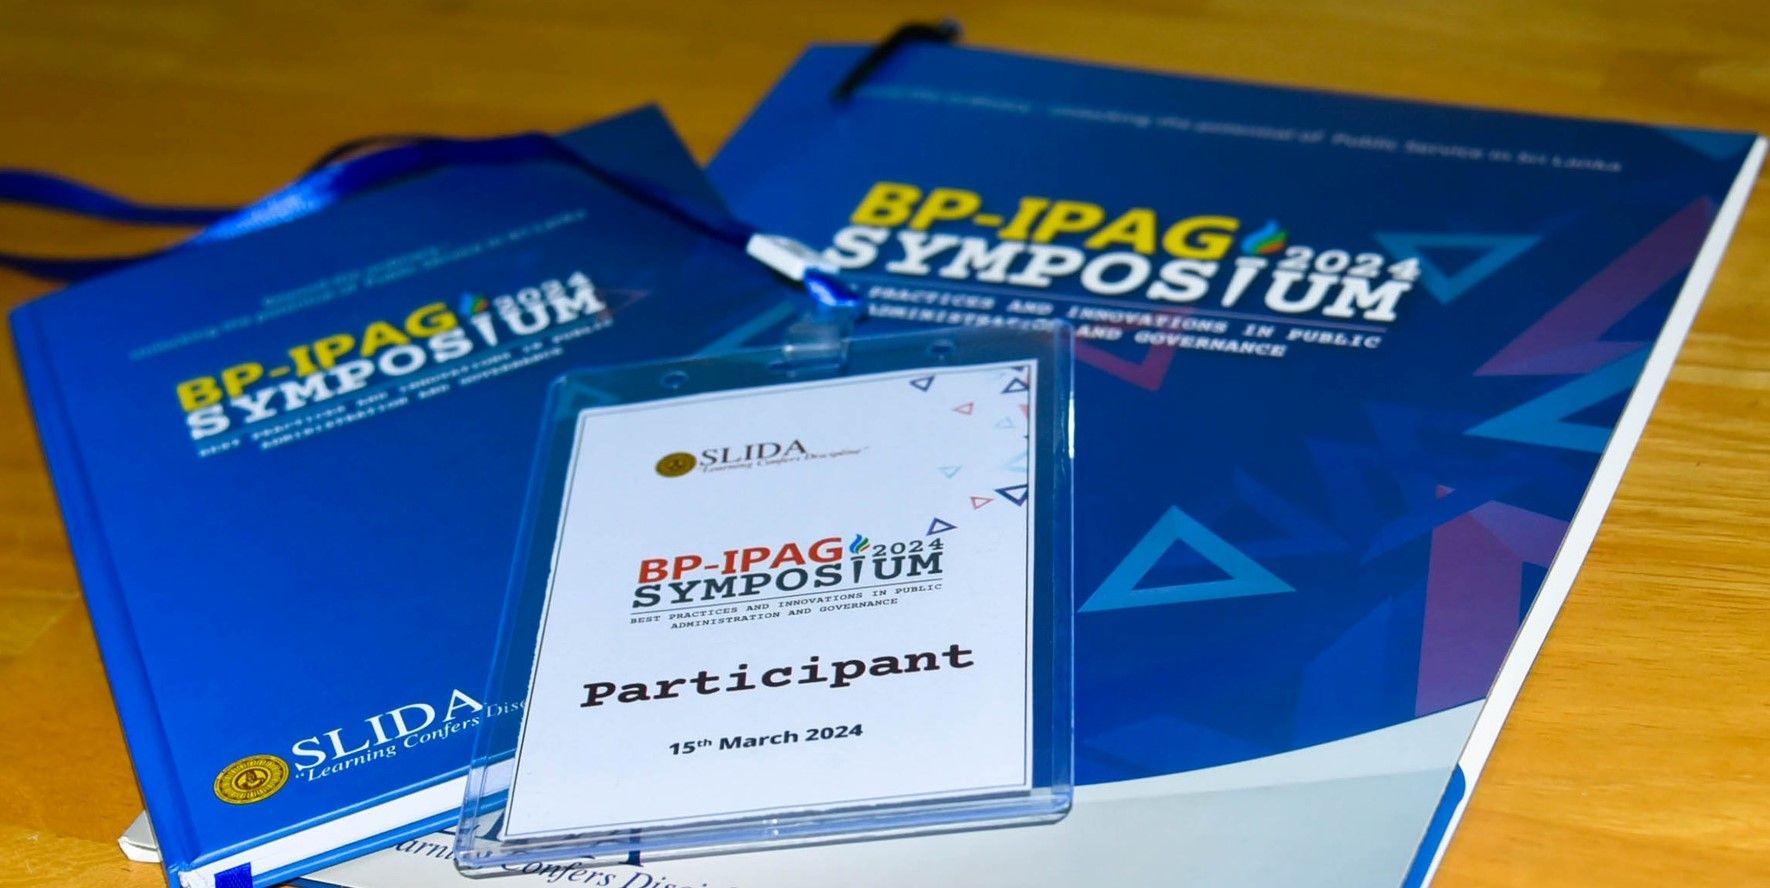 BP-IPAG Symposium